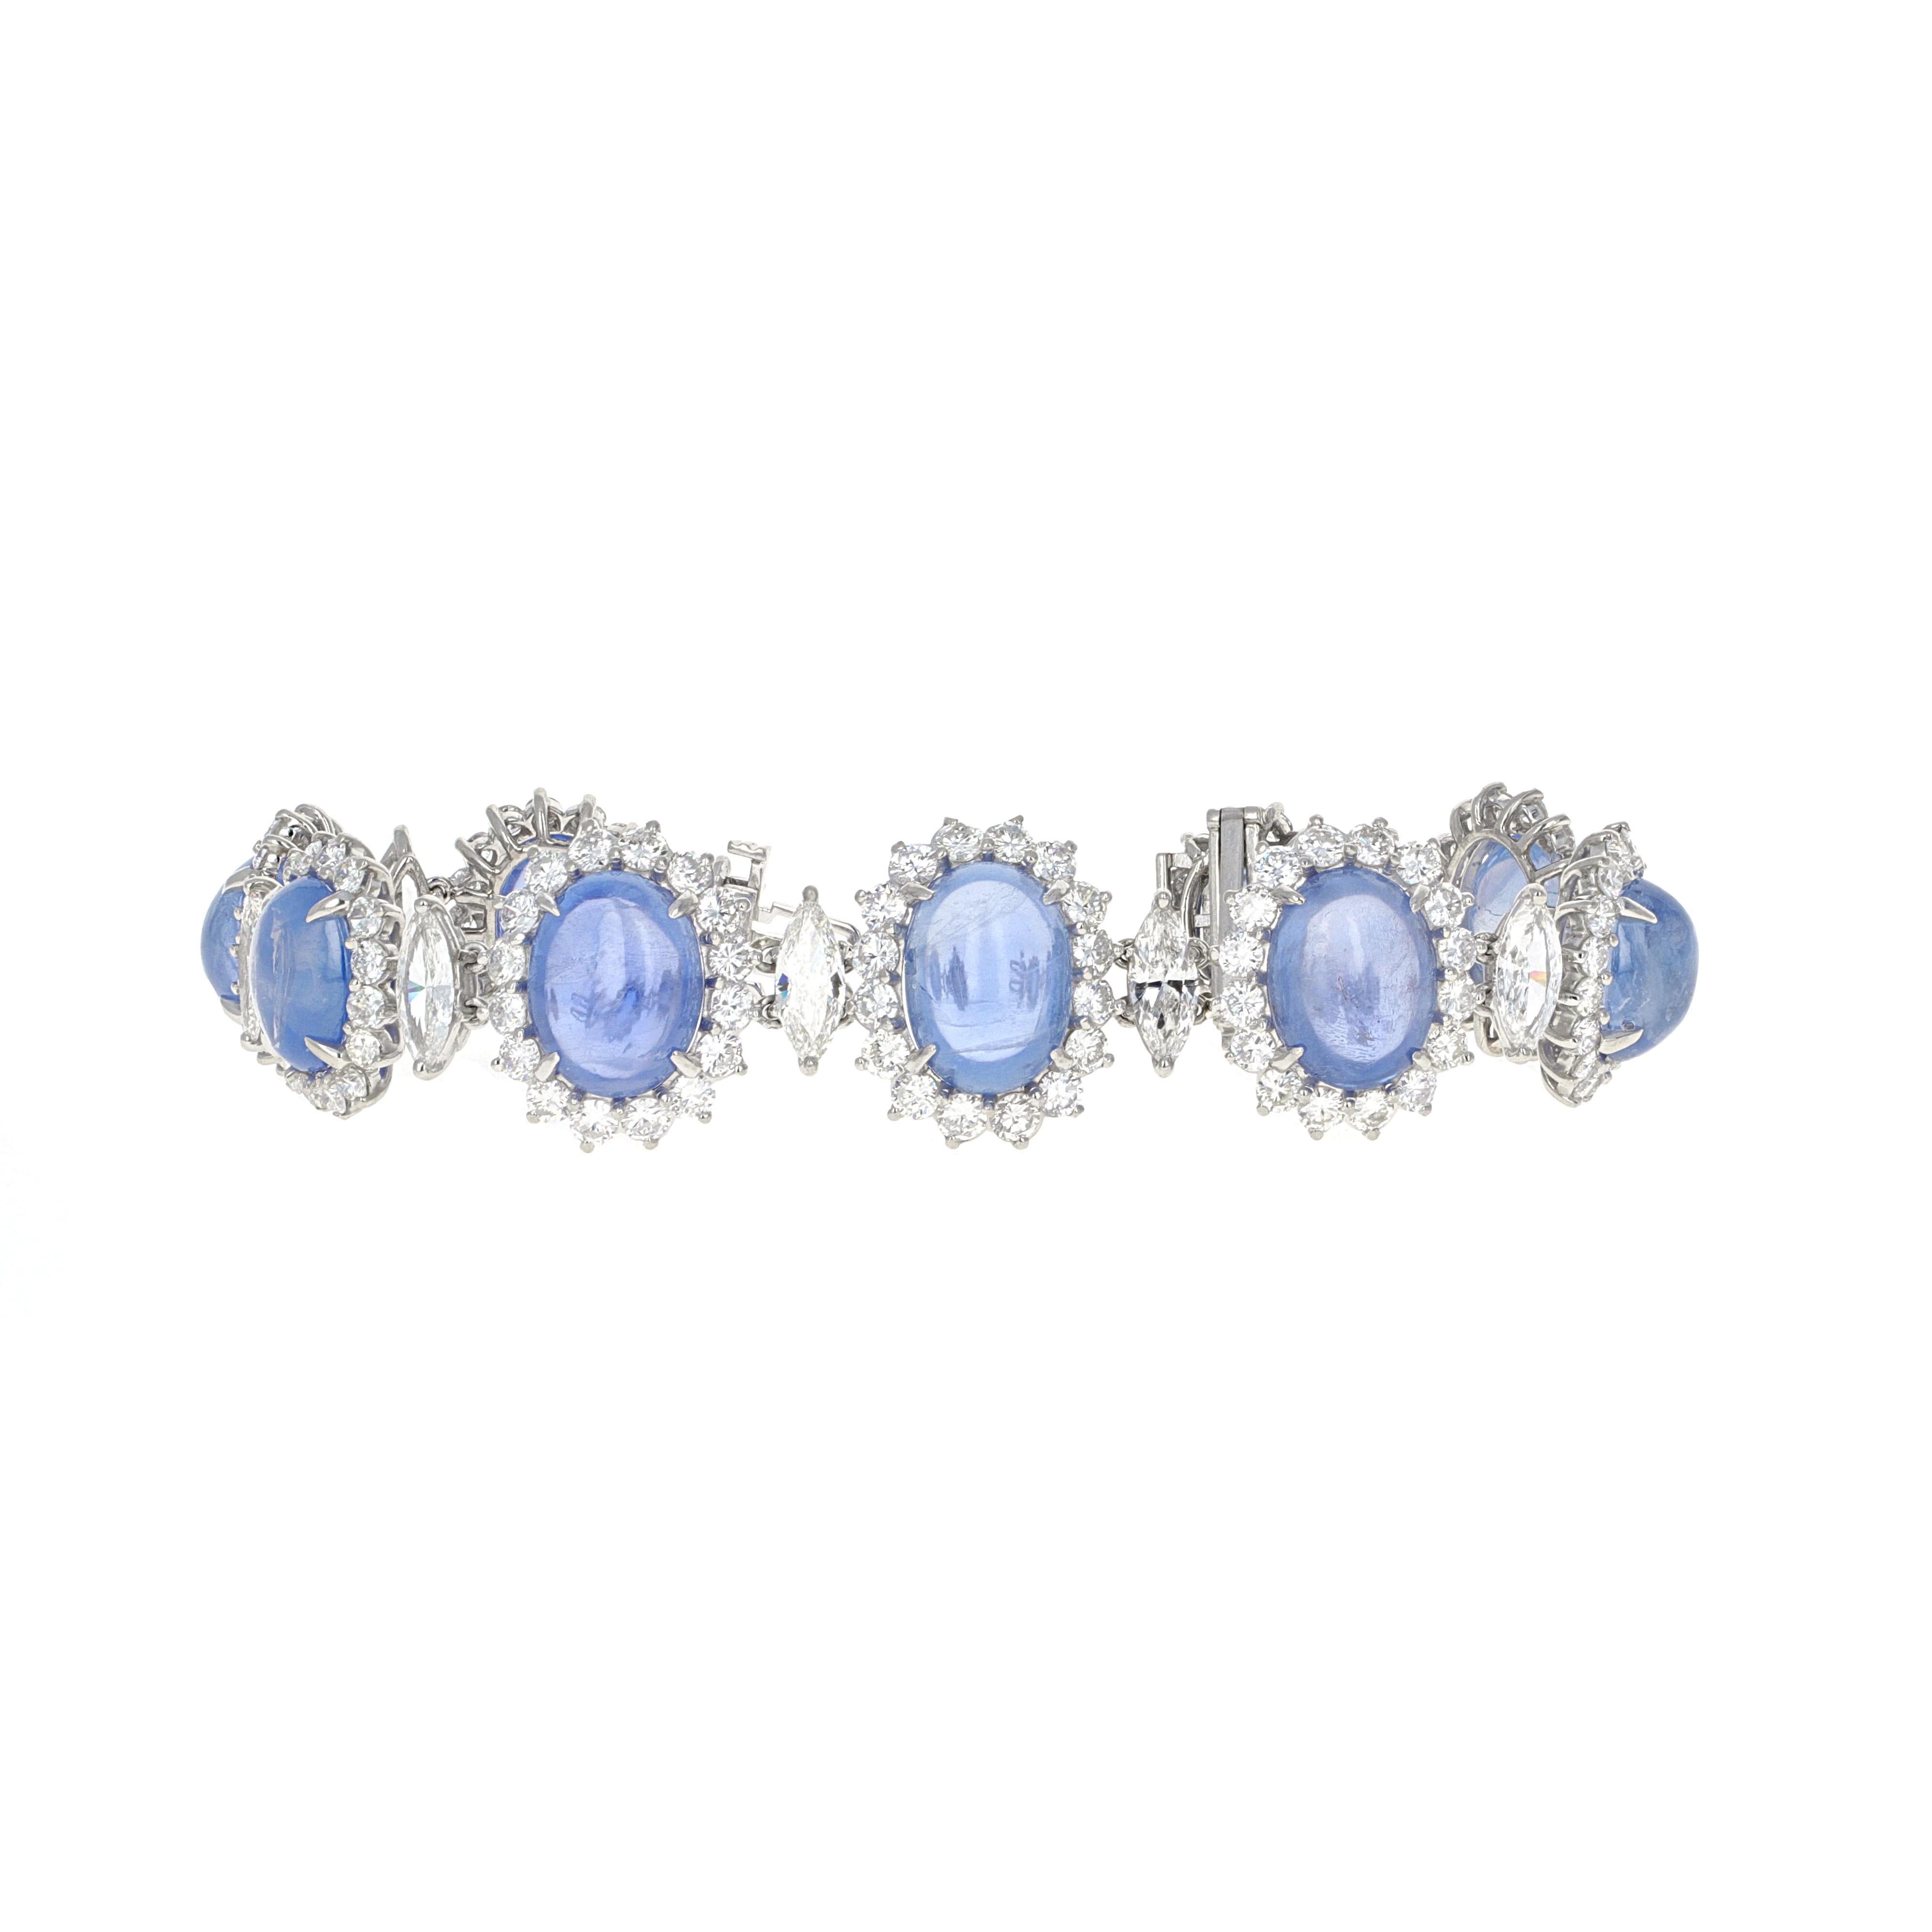 Oval Cut 62 Carat, Blue Sapphire Cabochon and Diamond Retro Bracelet